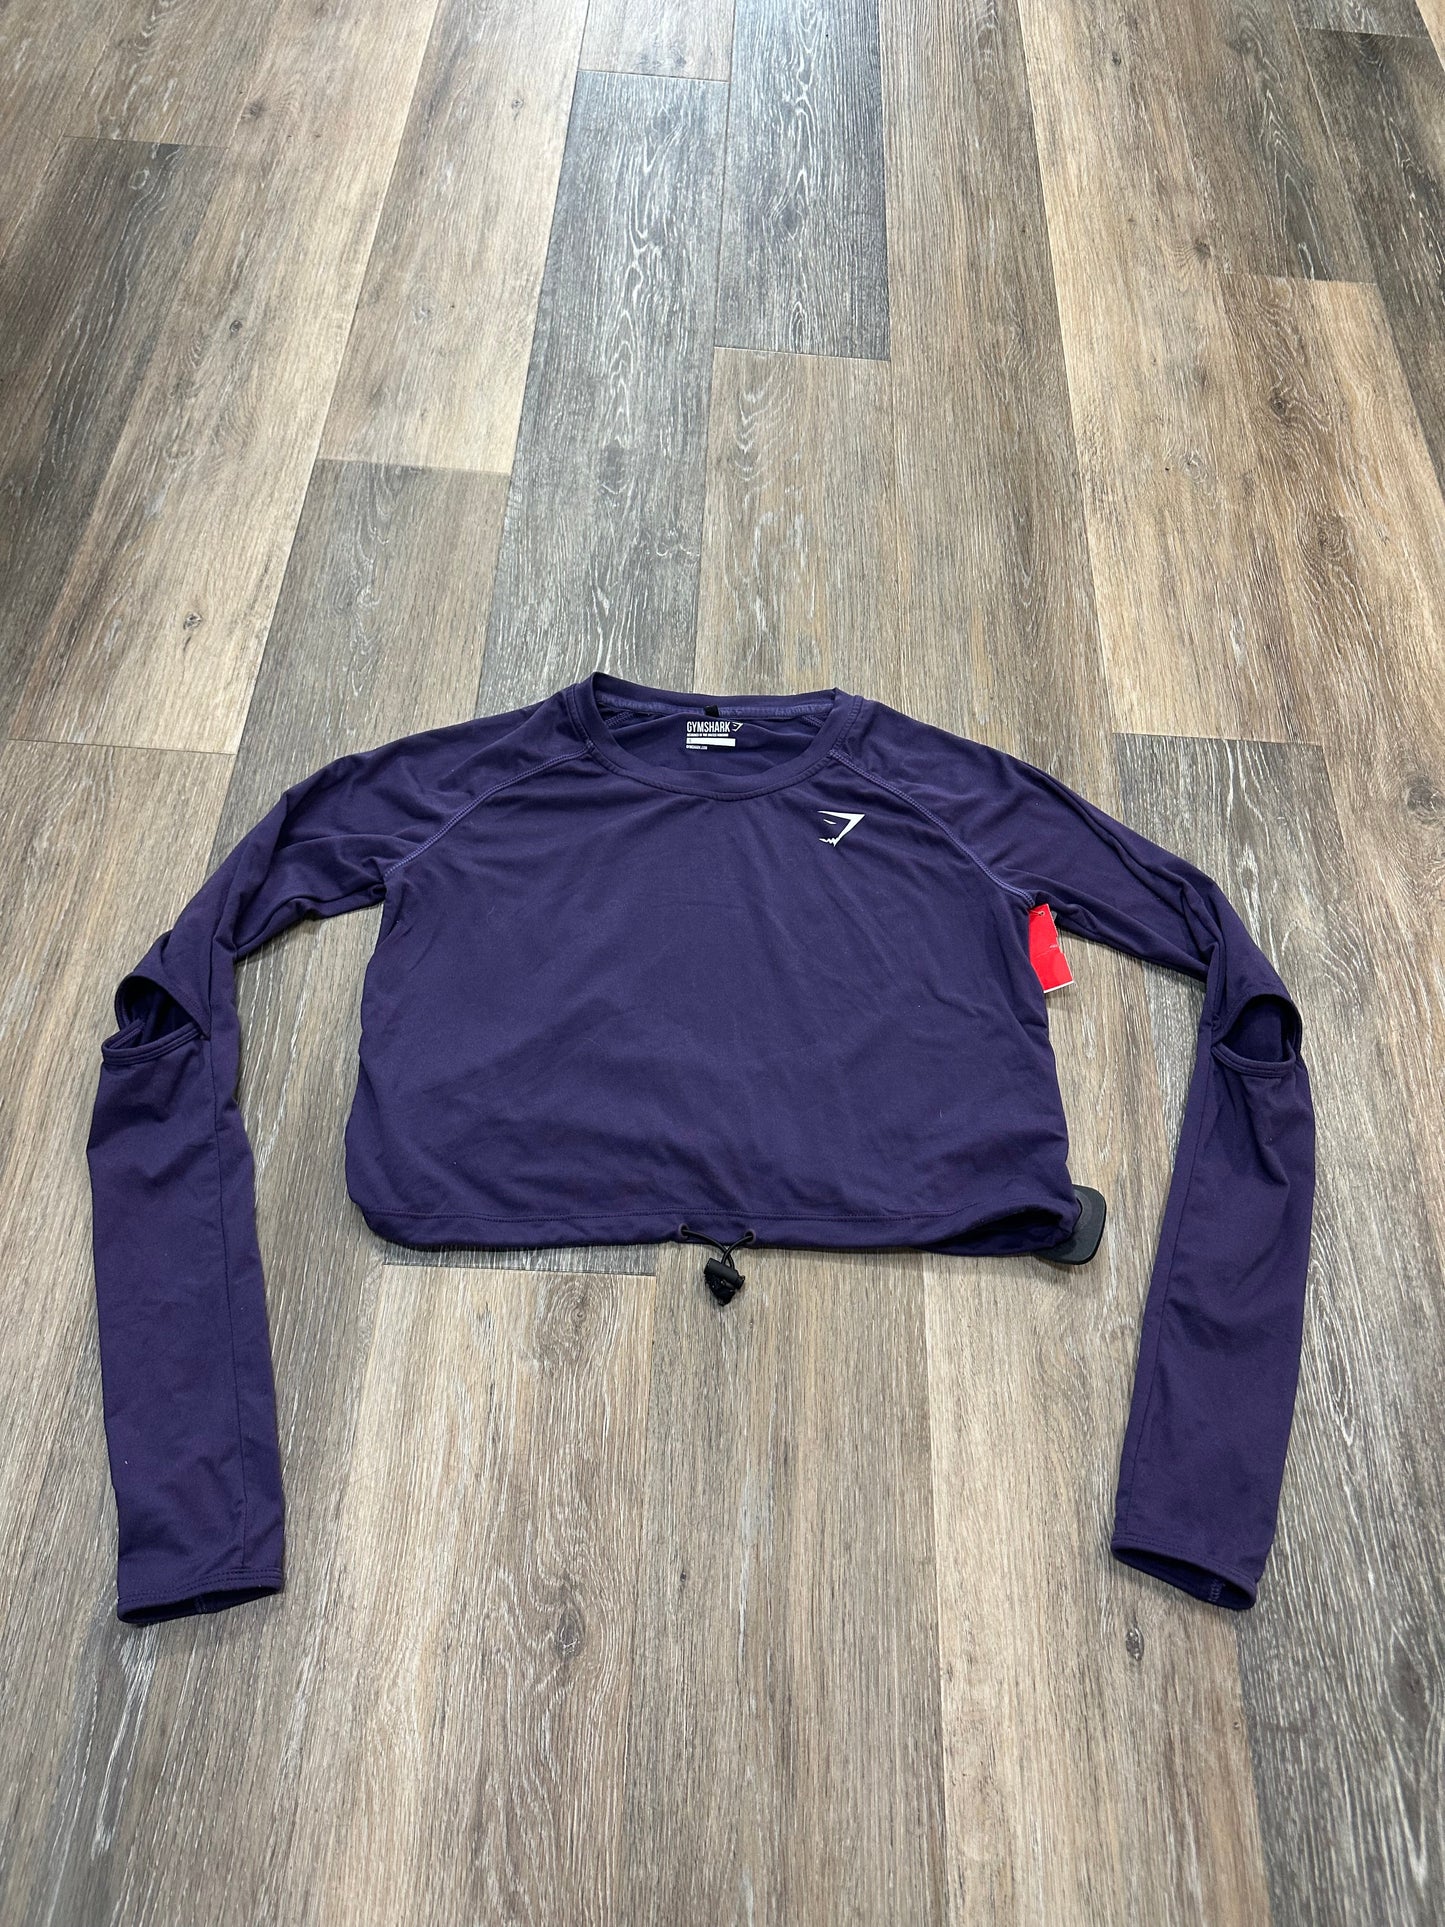 Purple Athletic Top Long Sleeve Collar Gym Shark, Size S